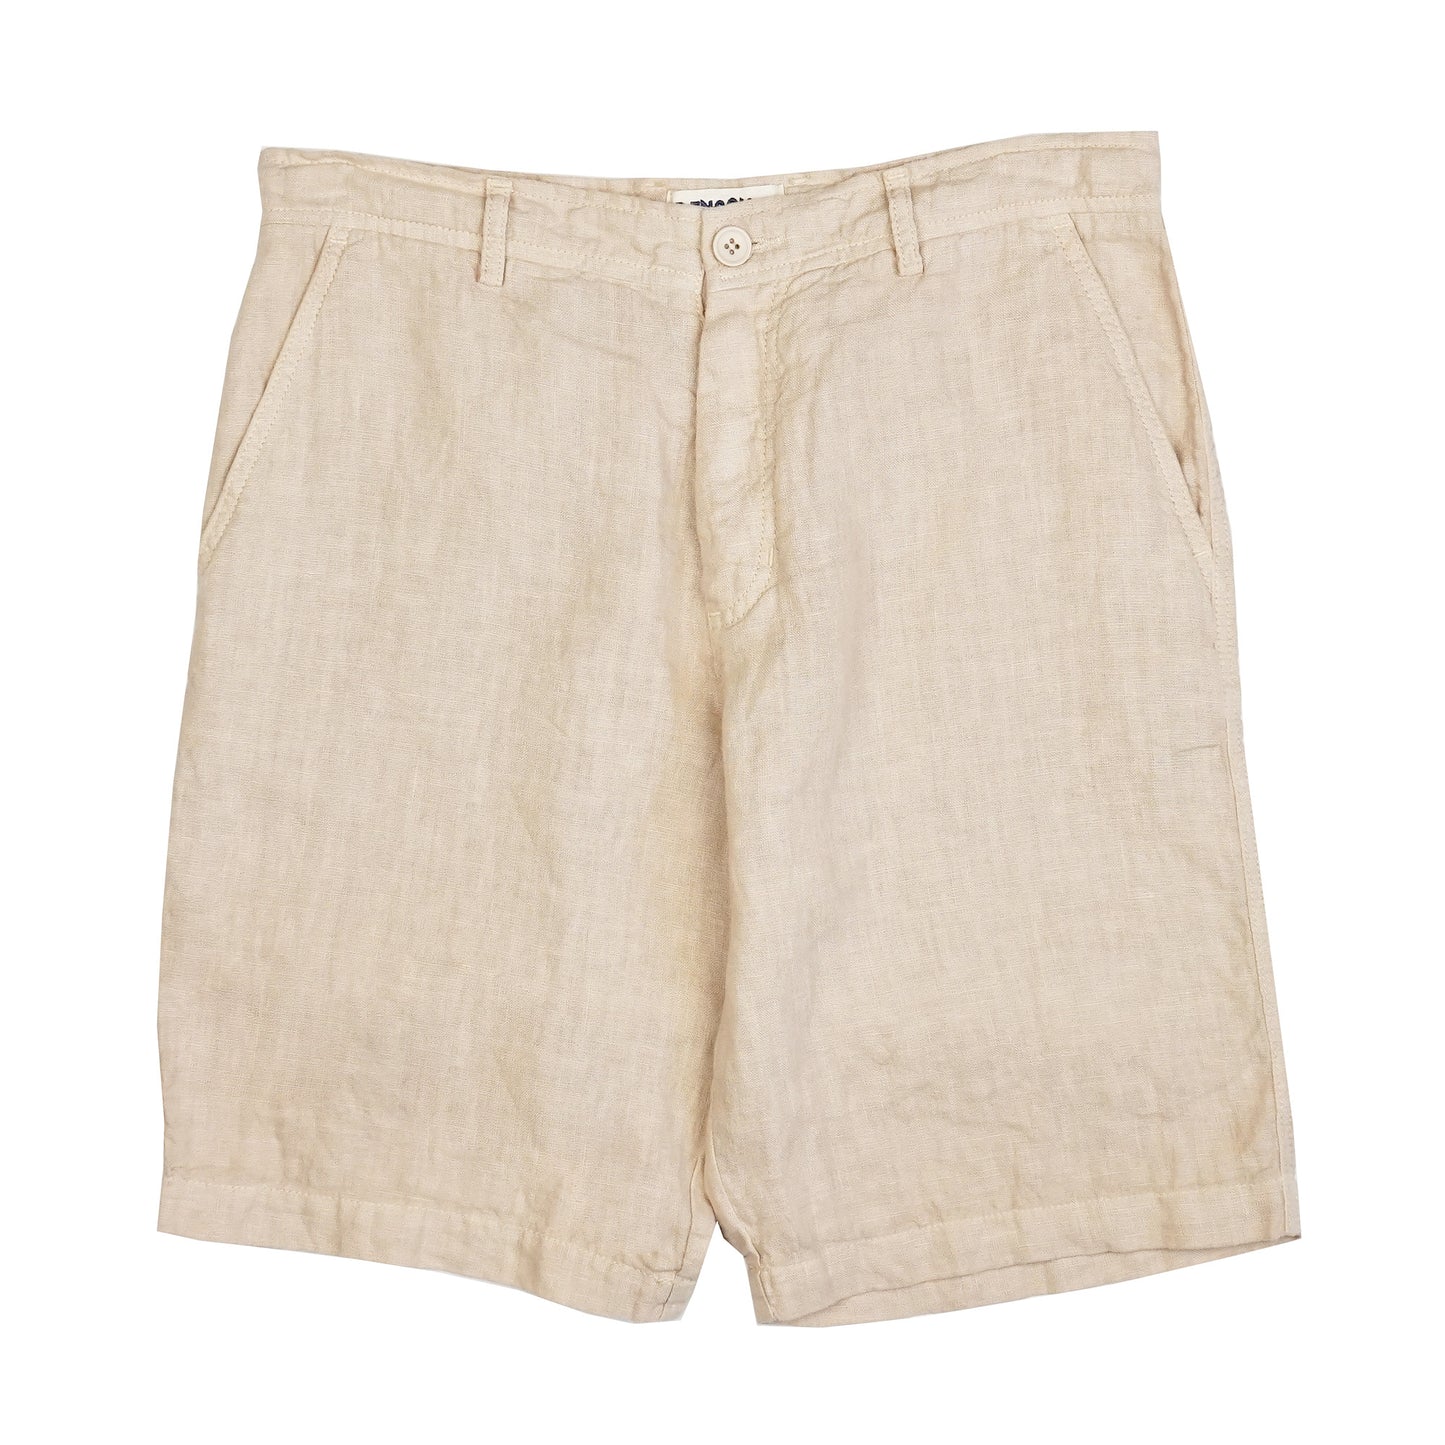 Palm Springs Beige Linen Shorts